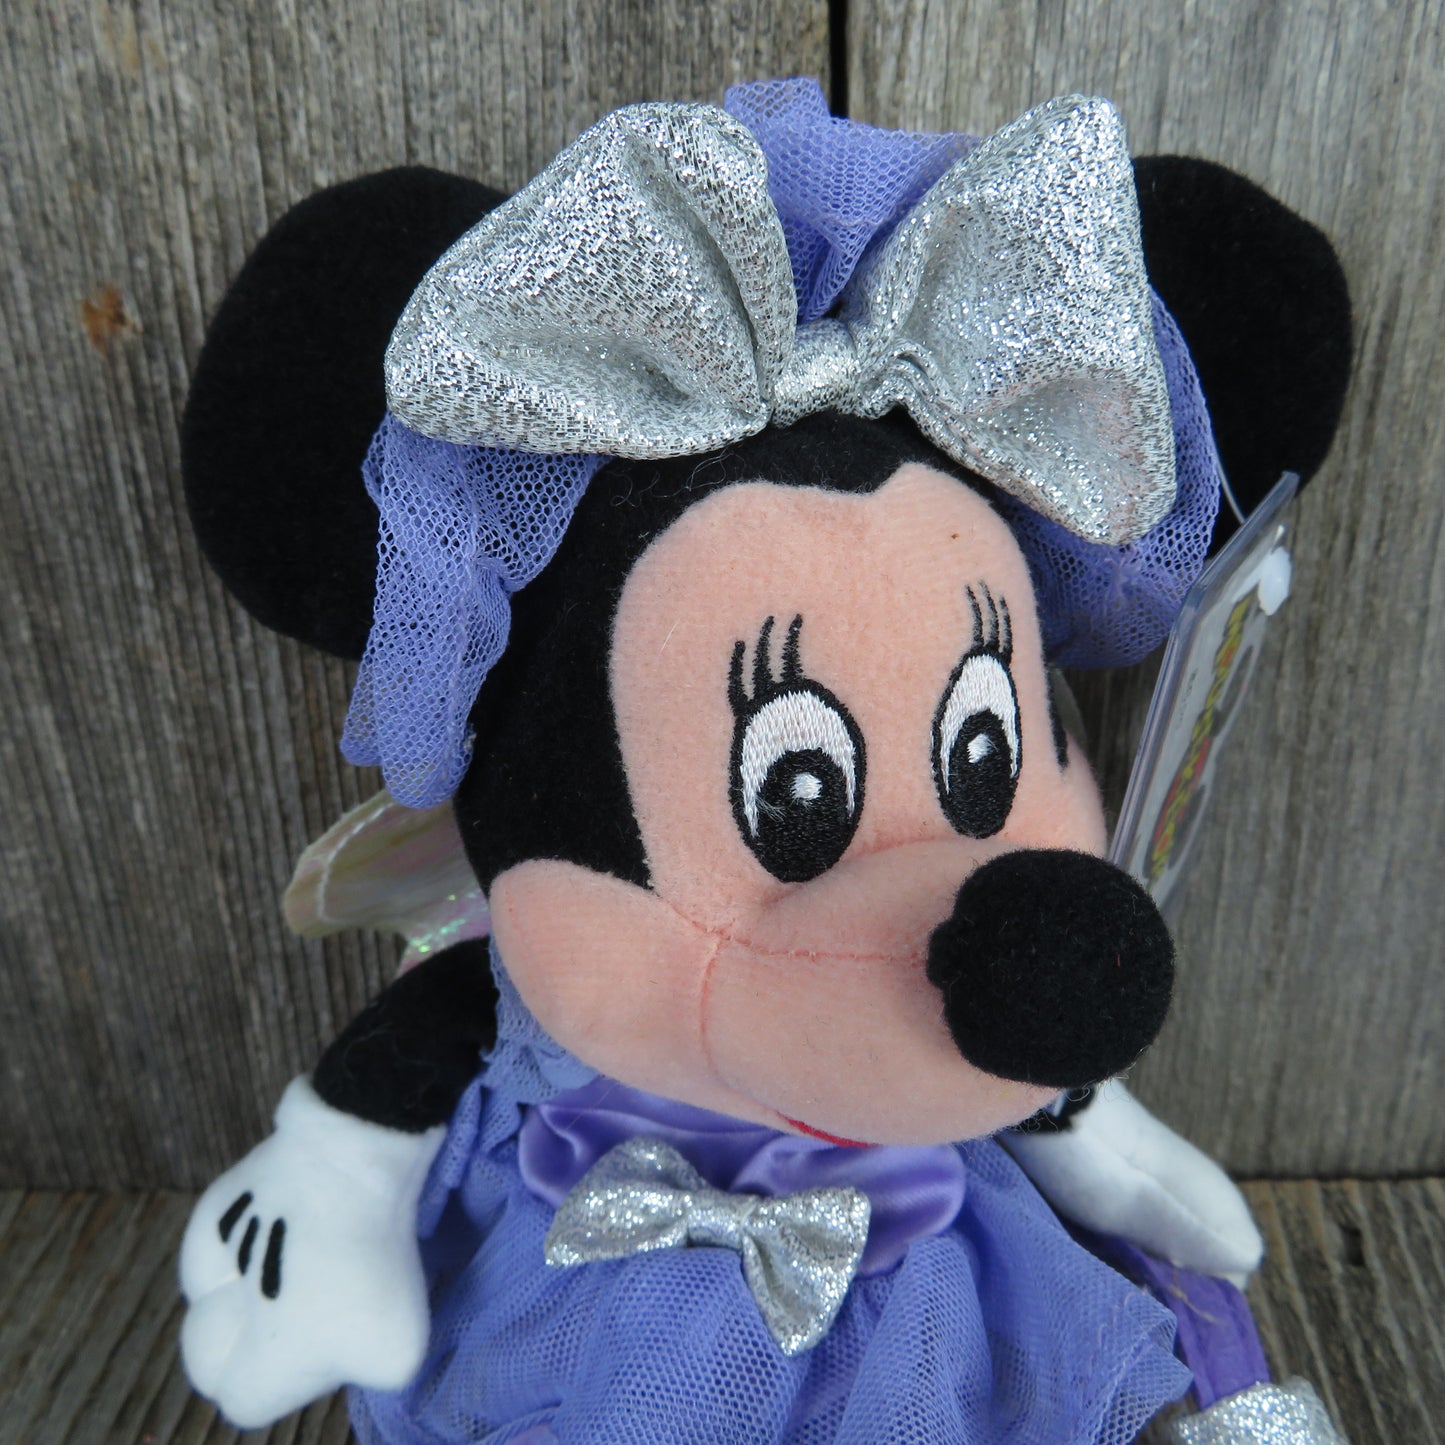 Minnie Mouse Sugar Plum Fairy Plush Beanie Disneyland Mouseketoys Bean Bag Stuffed Animal - At Grandma's Table